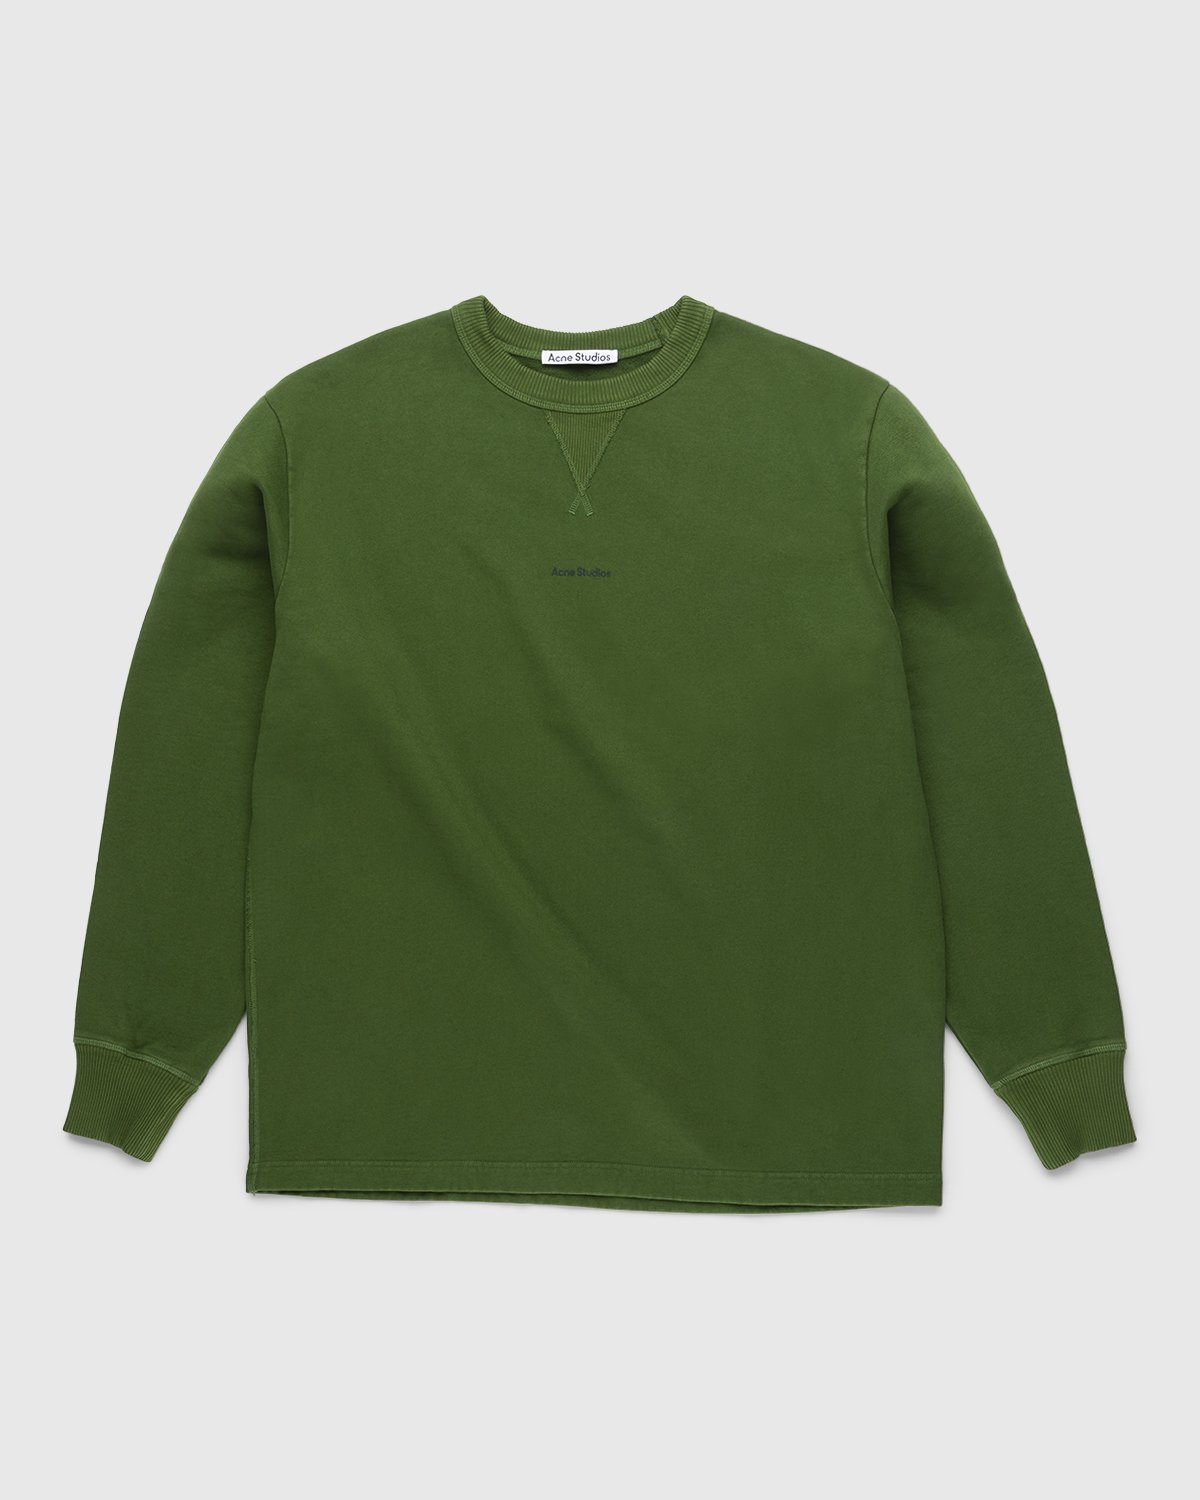 Acne Studios - Organic Cotton Crewneck Sweatshirt Bottle Green - Clothing - Green - Image 1